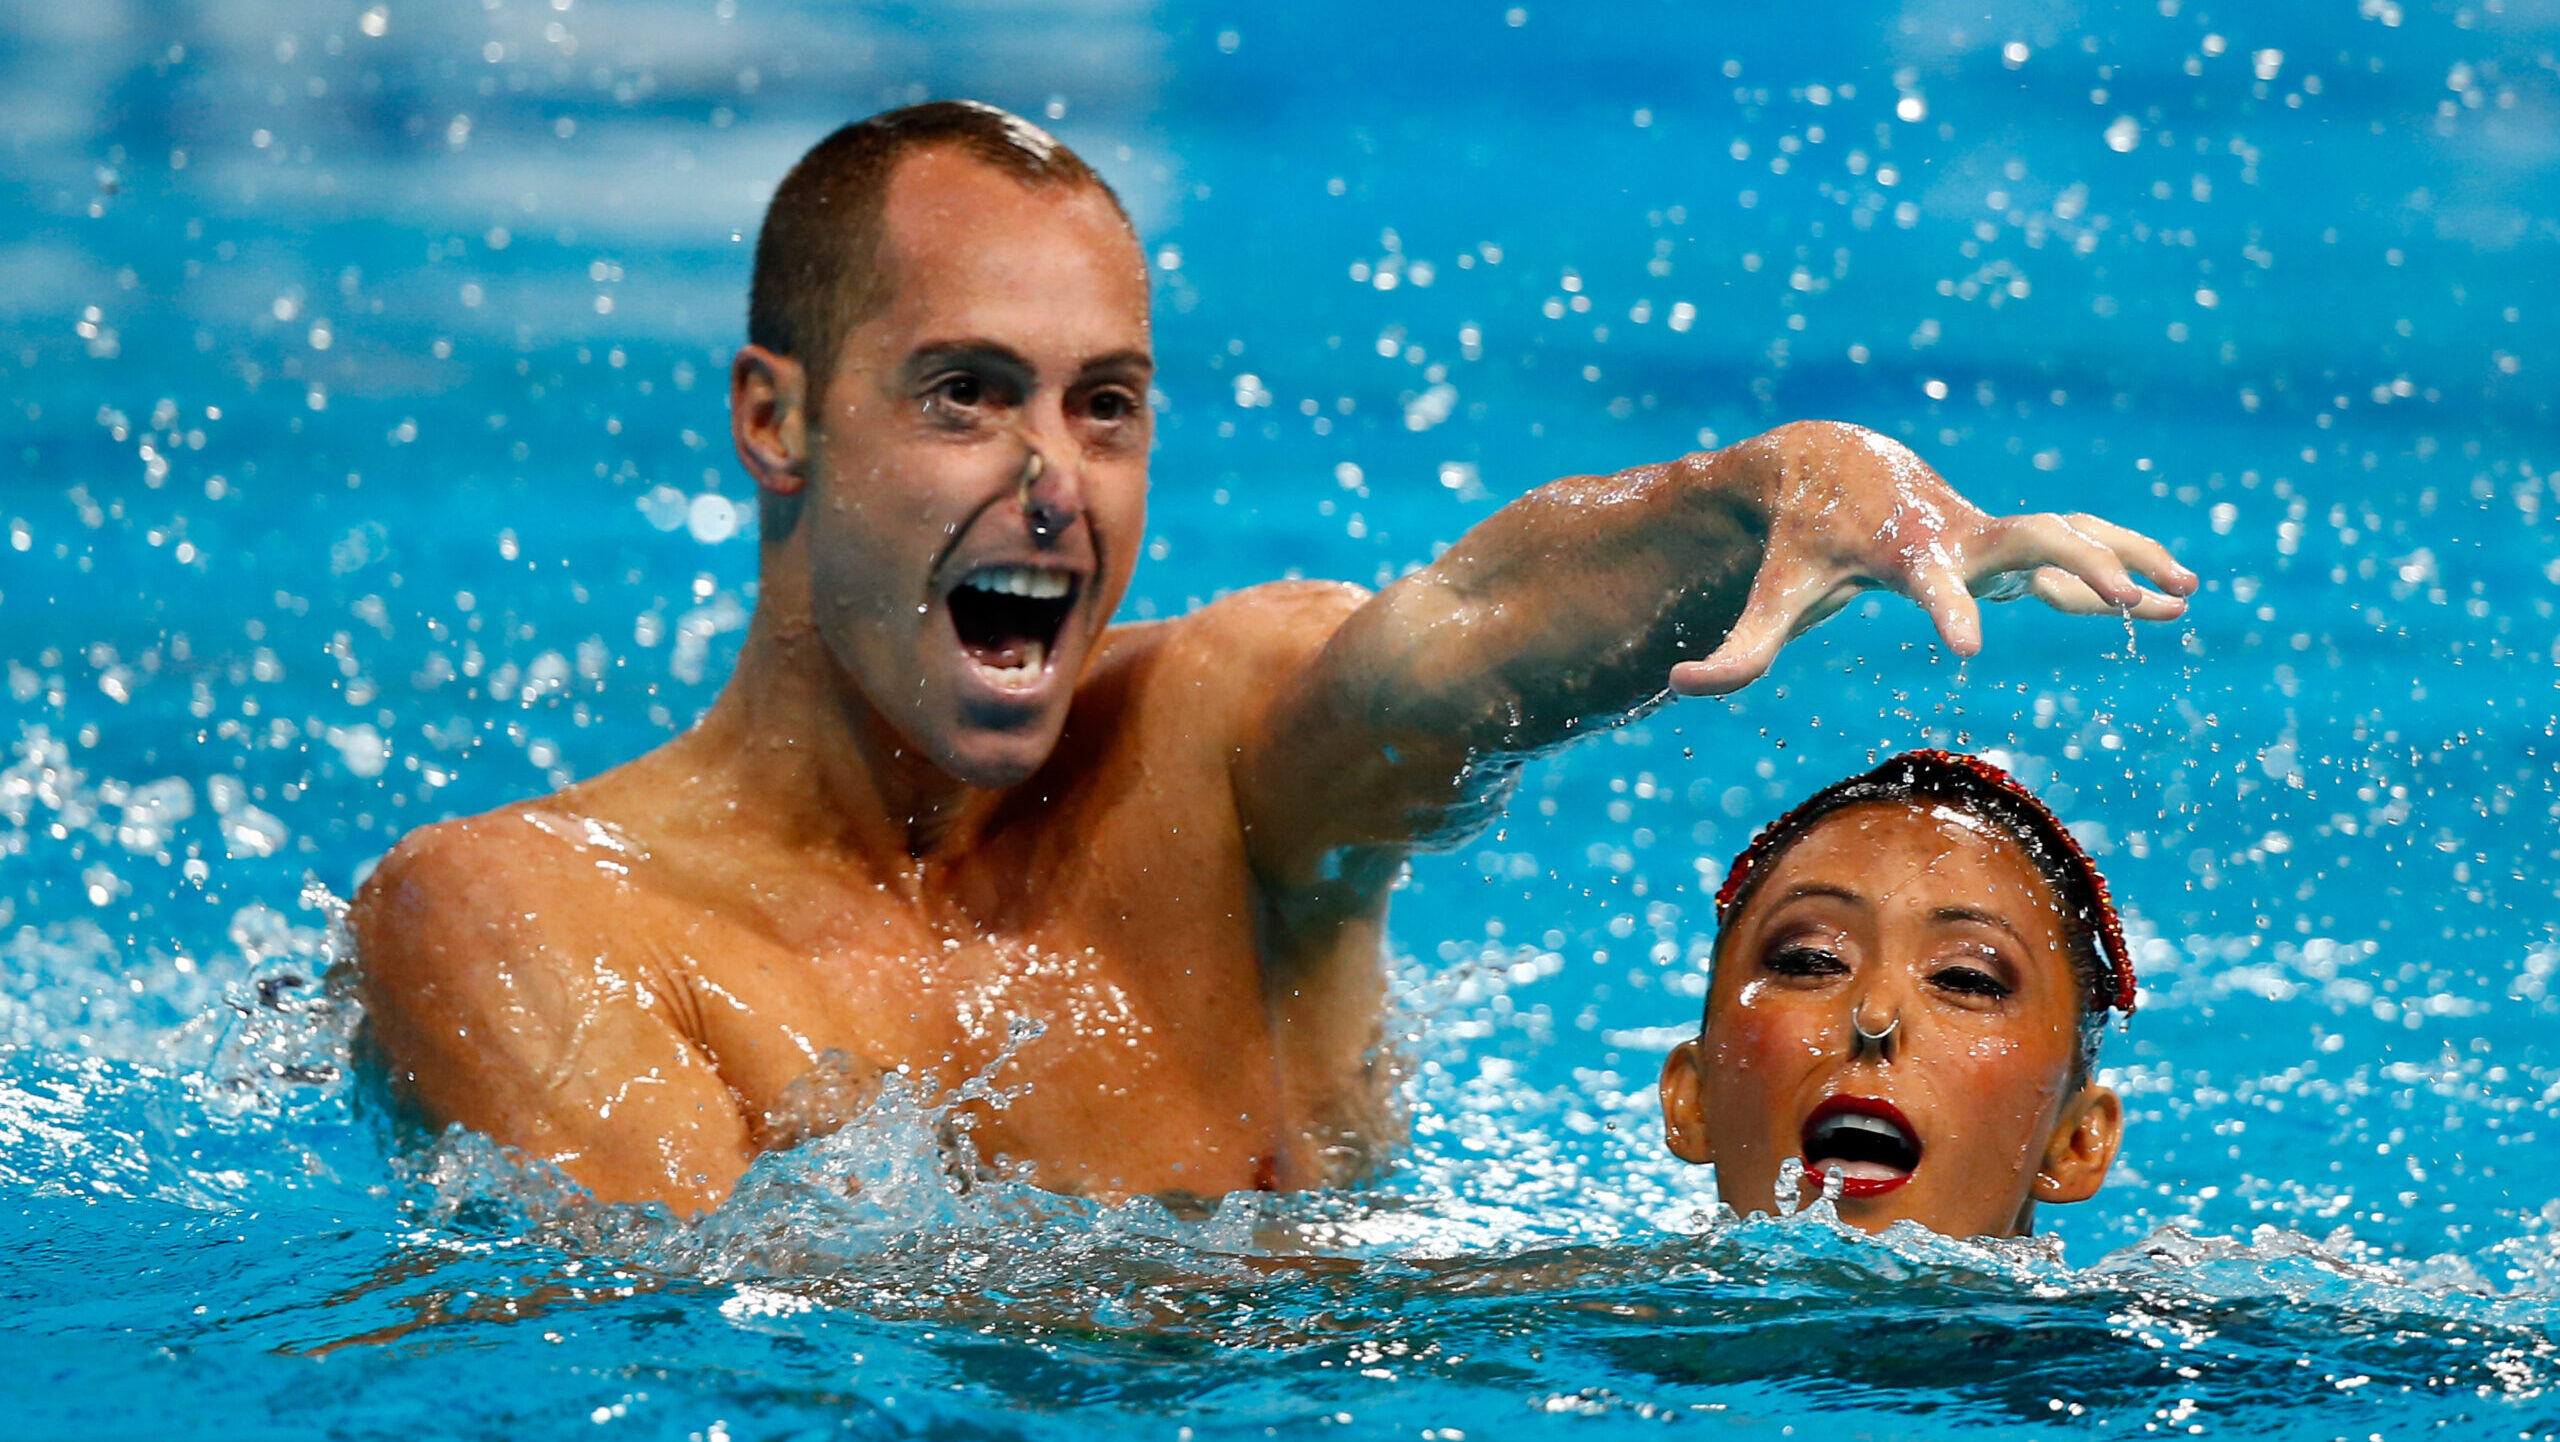 Bill May Artistic Swimming Olympics...